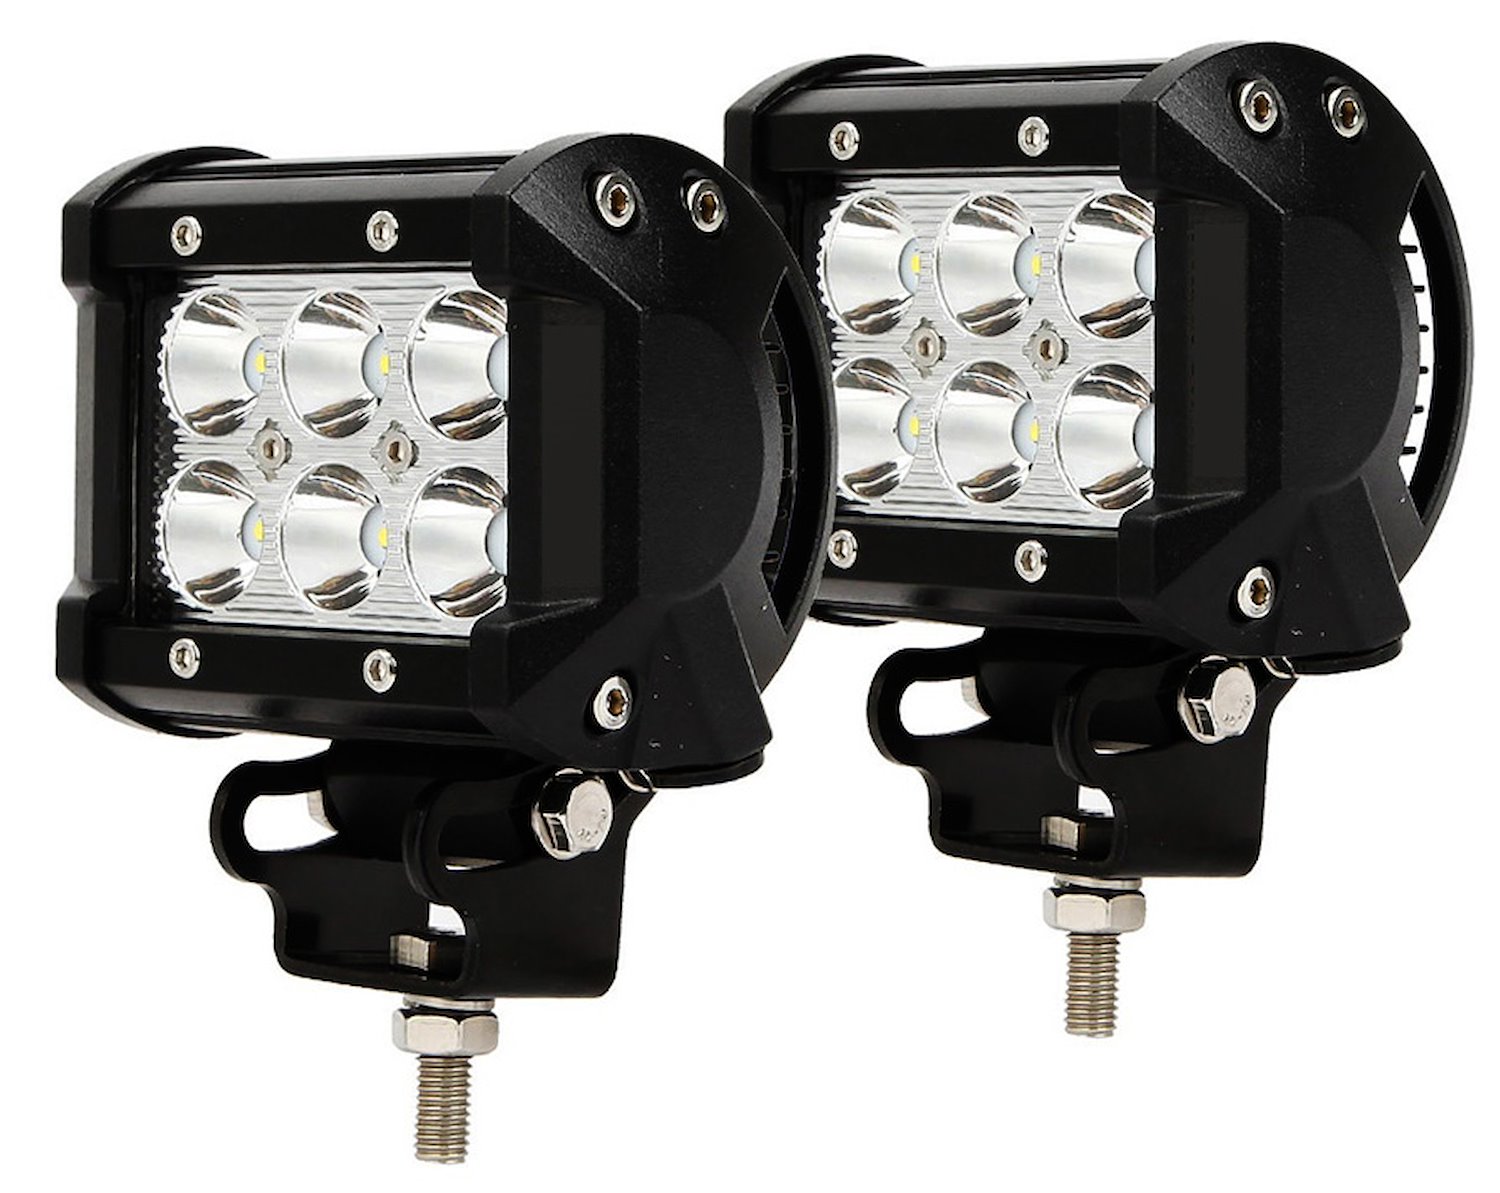 RS6L18WPR Street-Series 18W 6-LED Bottom Mount LED Spot Lights, Pair